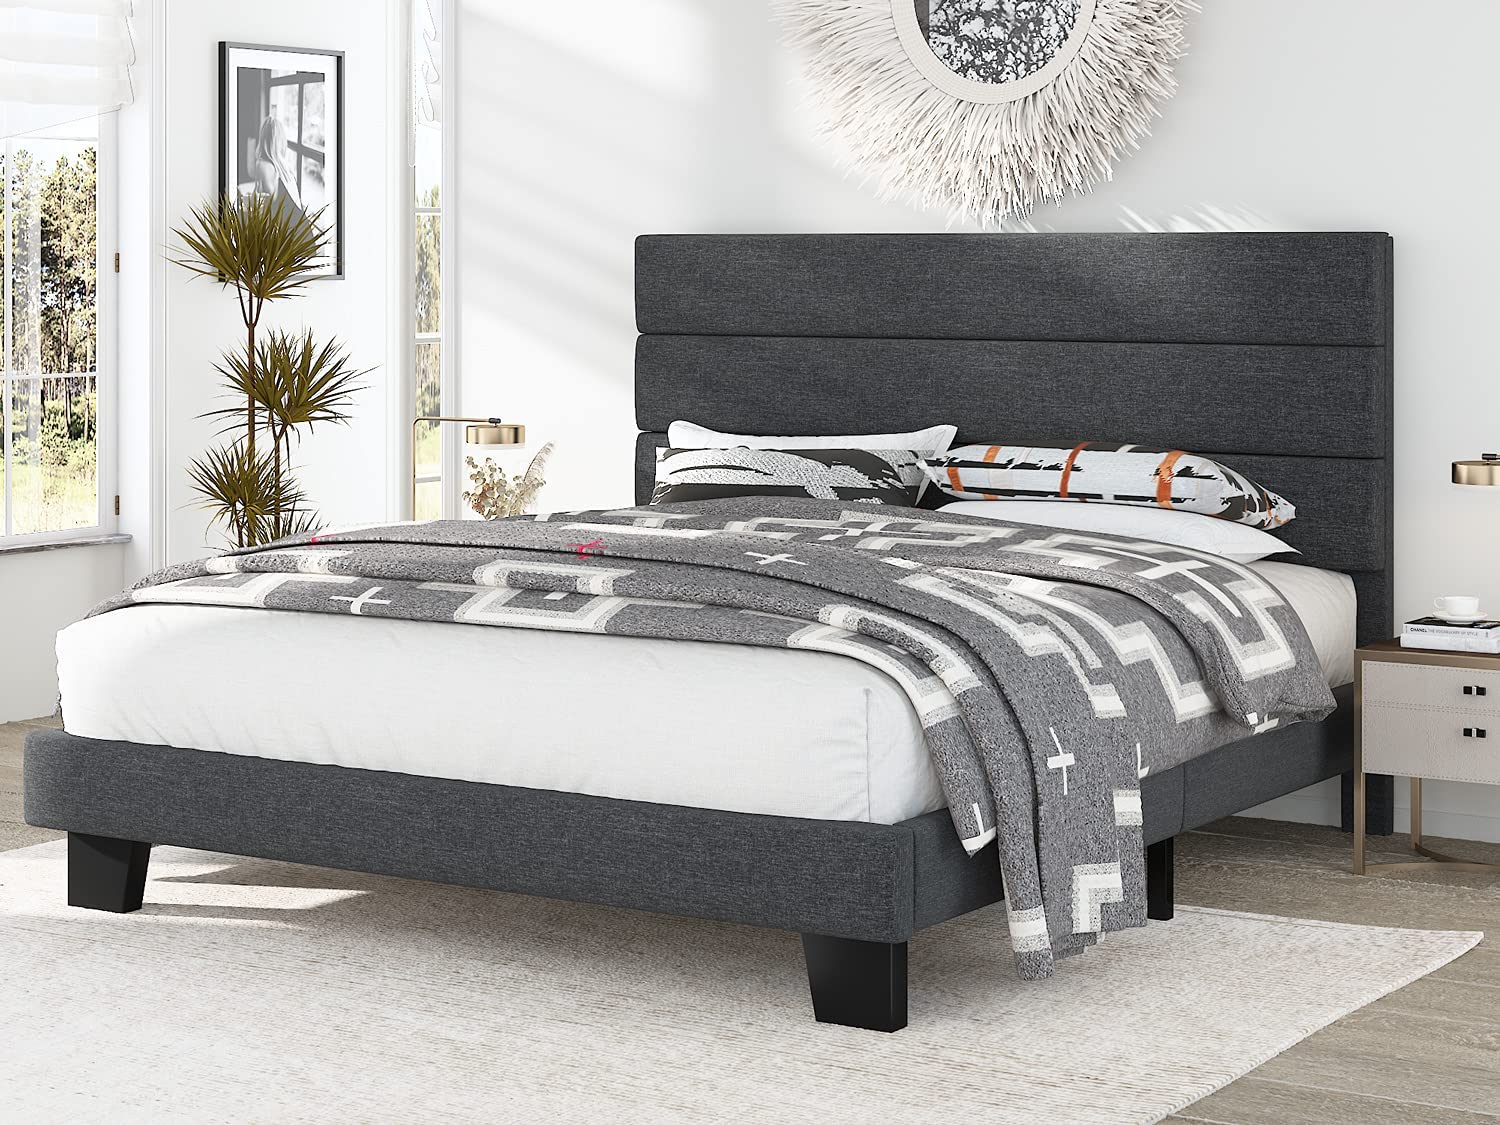 Allewie King Size Fabric Upholstered Platform Bed